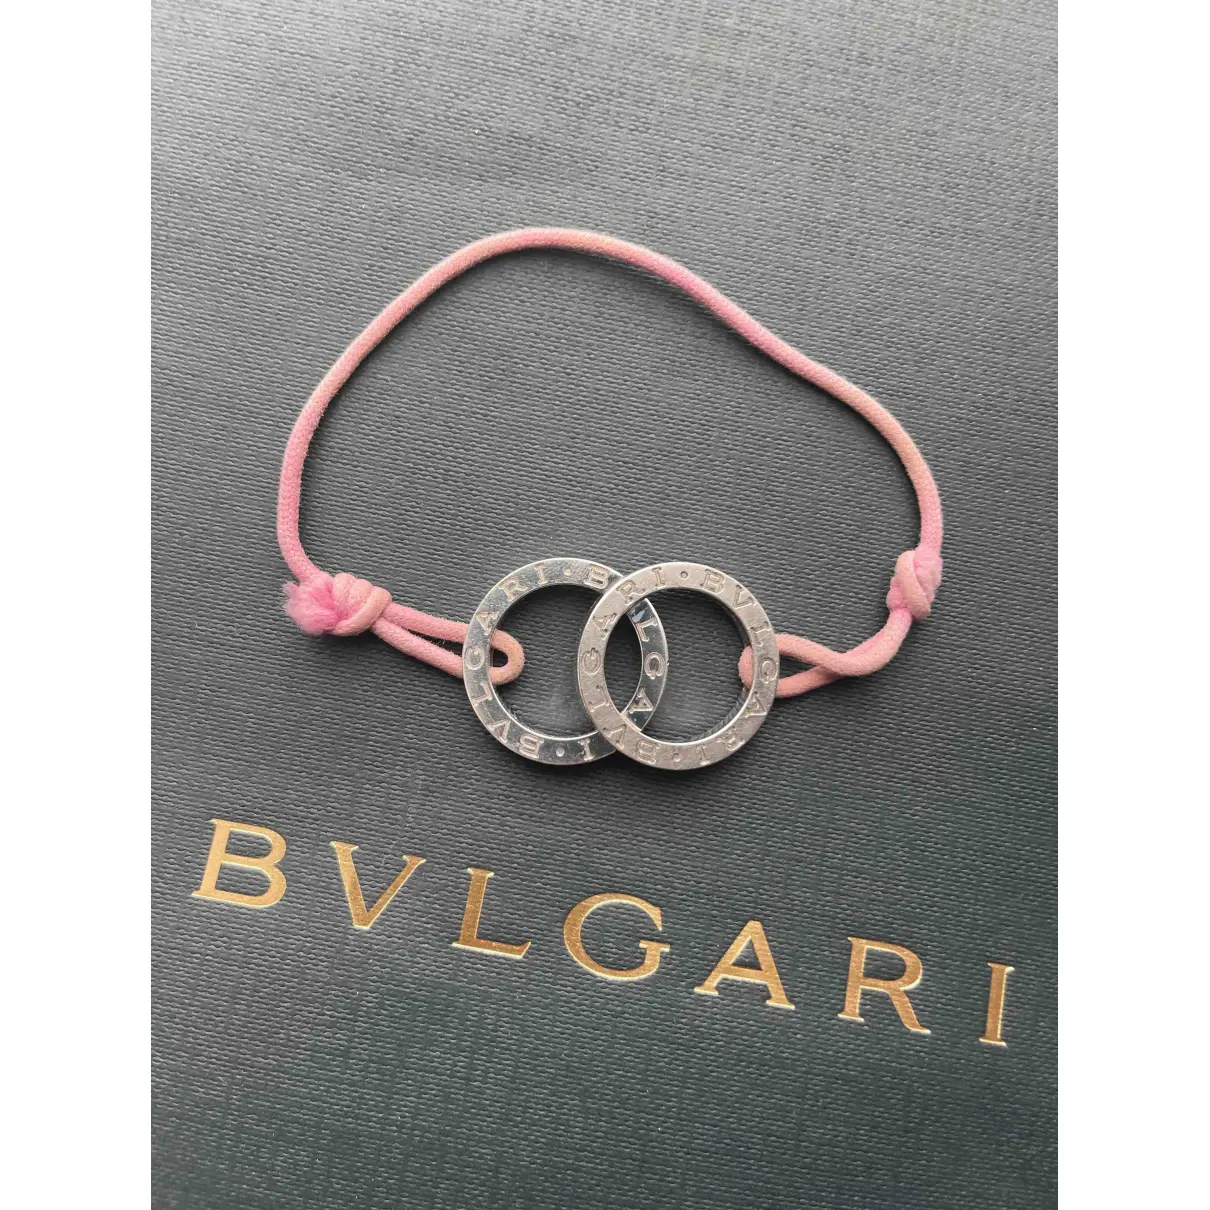 Bulgari silver bracelet Bvlgari